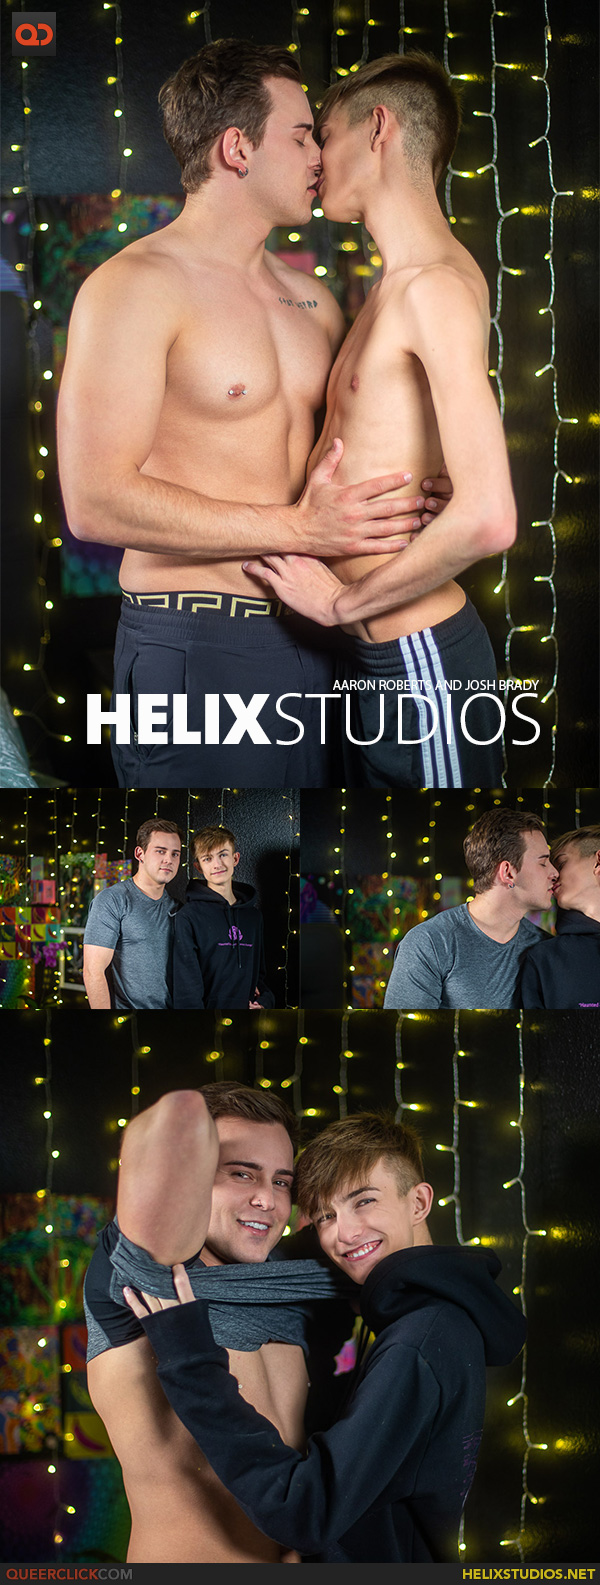 Helix Studios: Aaron Roberts and Josh Brady